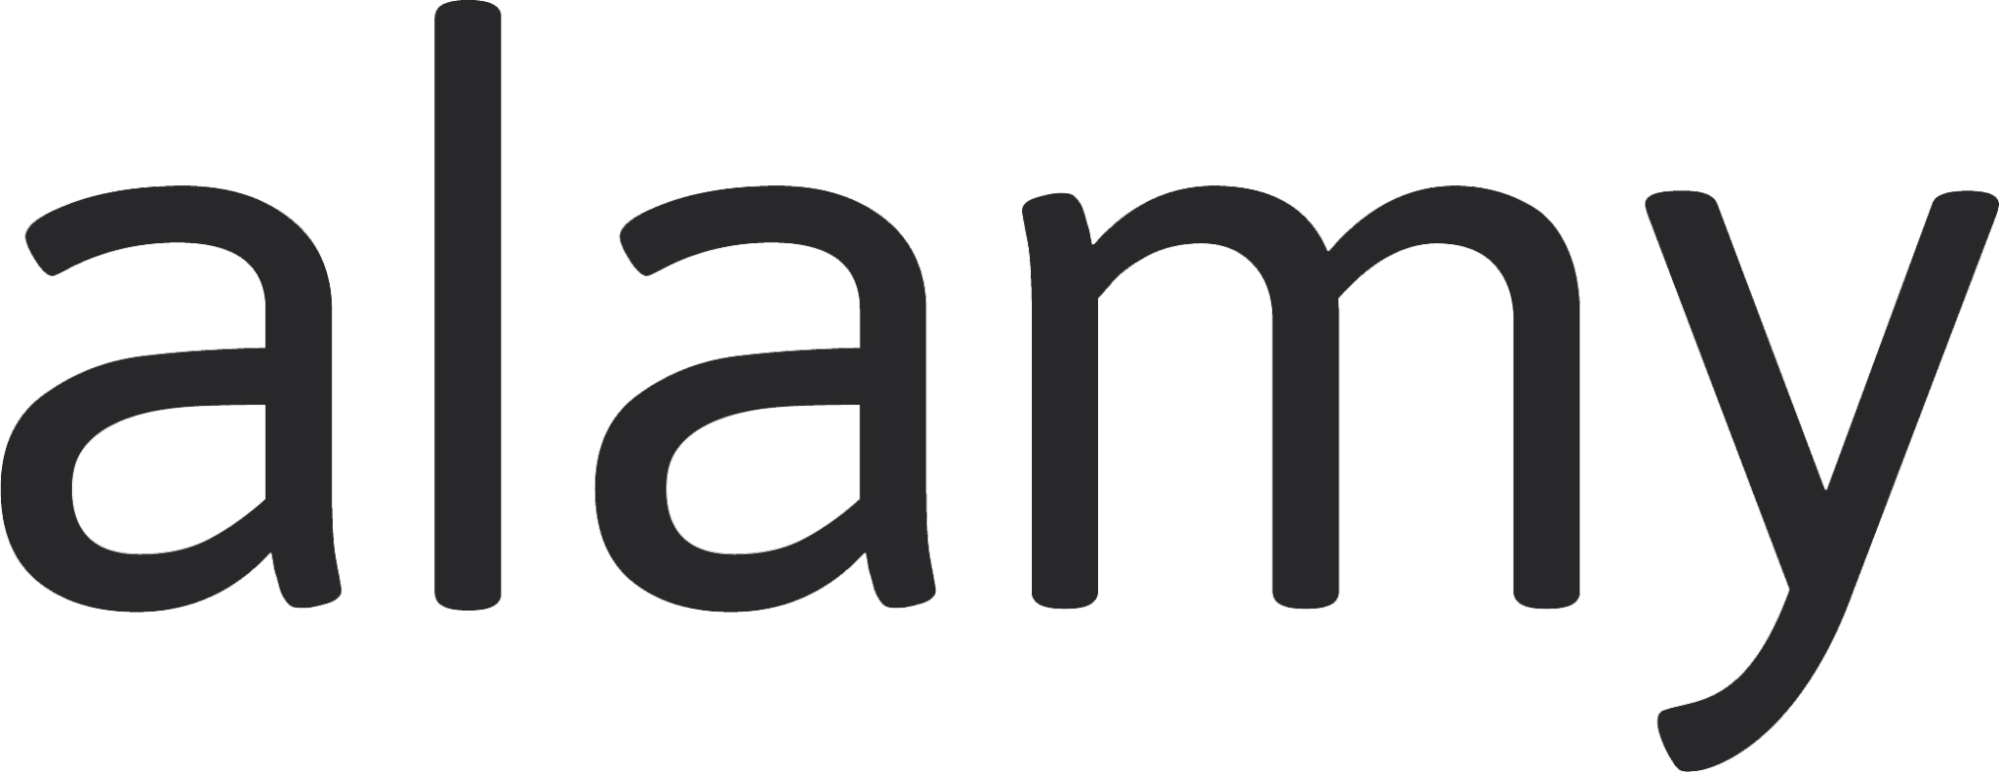 Alamy’s old logo.